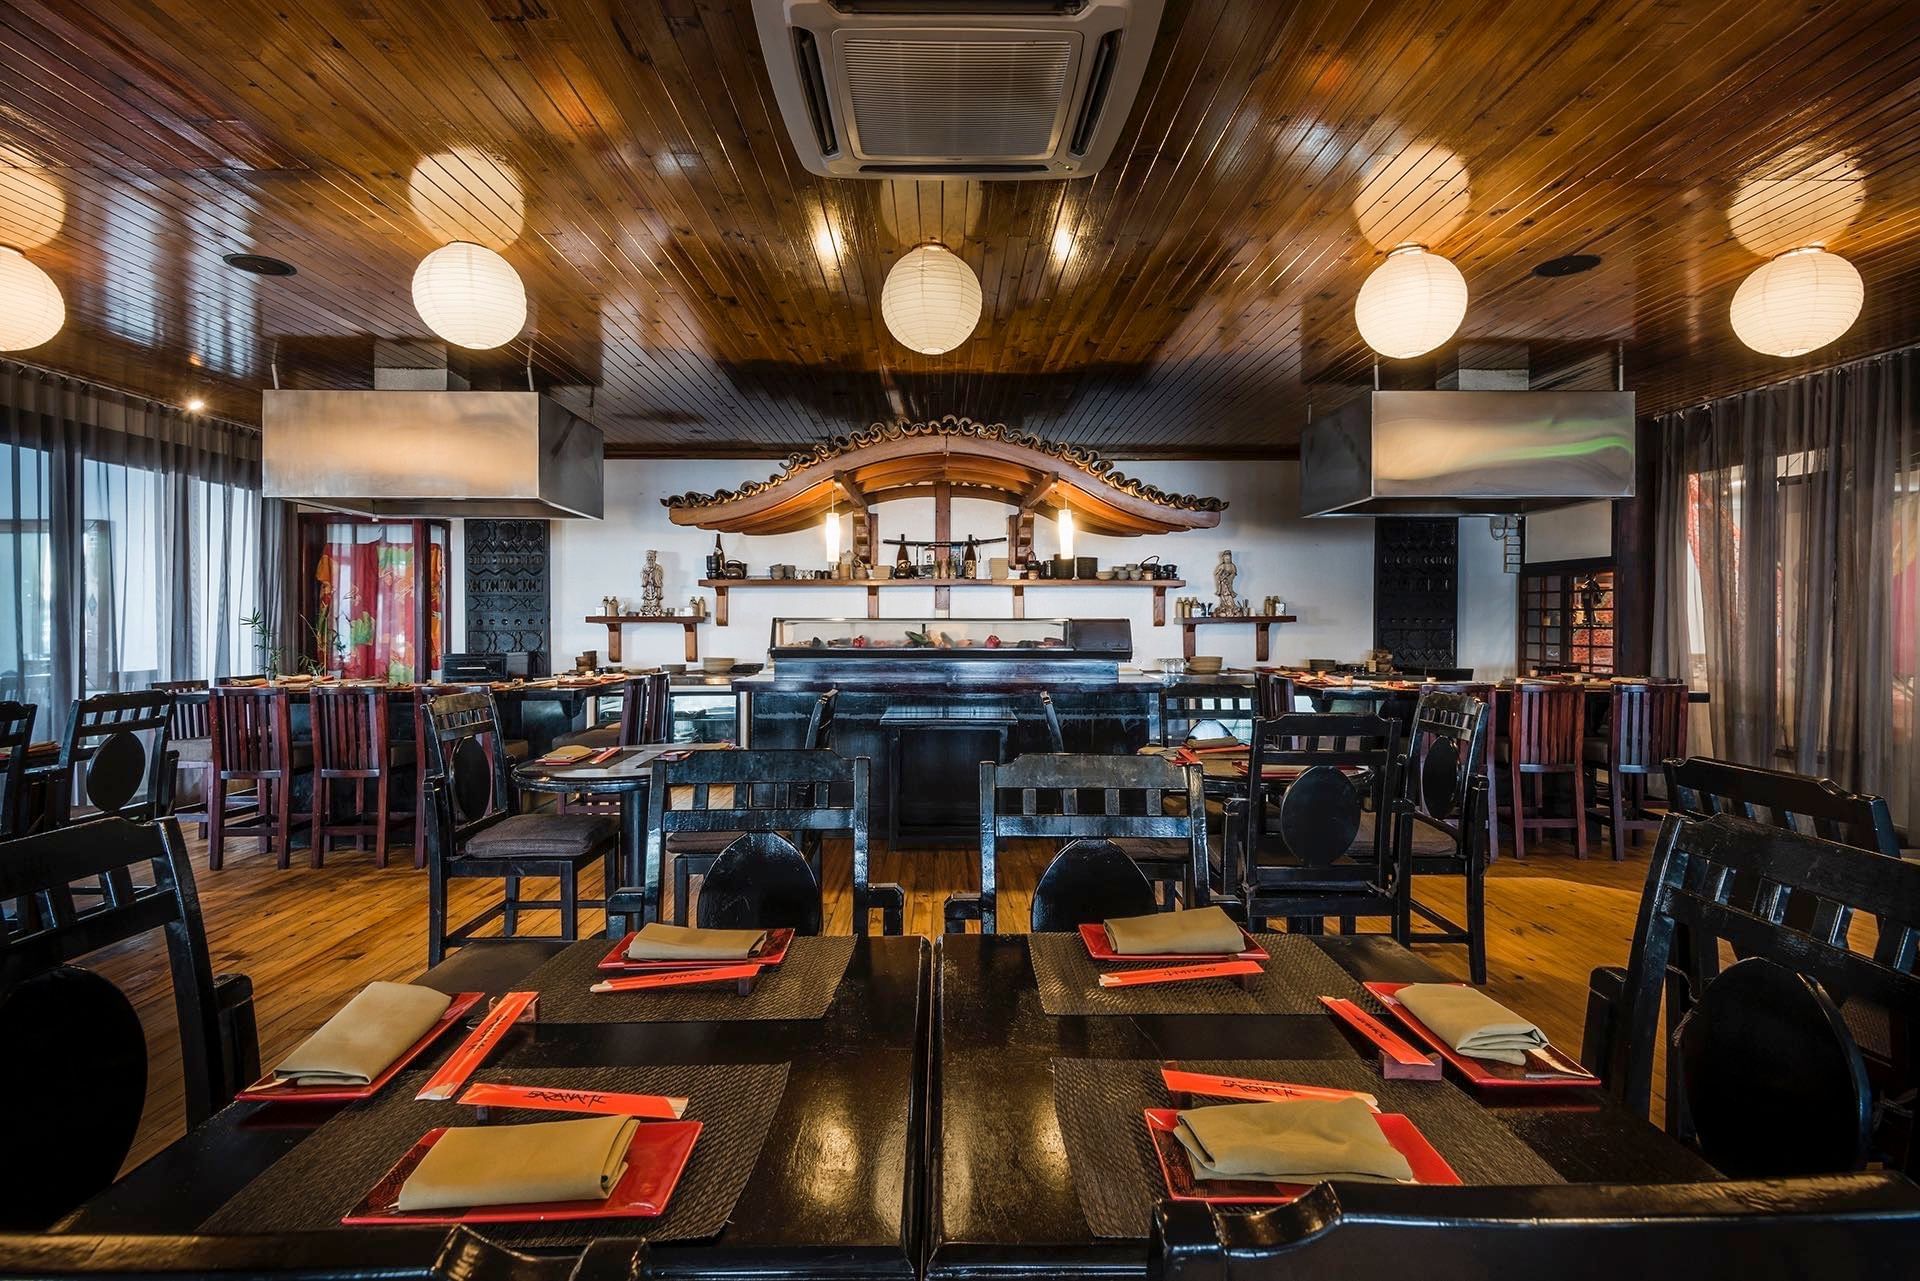 The Dining area in Sazanami Japanese restaurant at Warwick Fiji